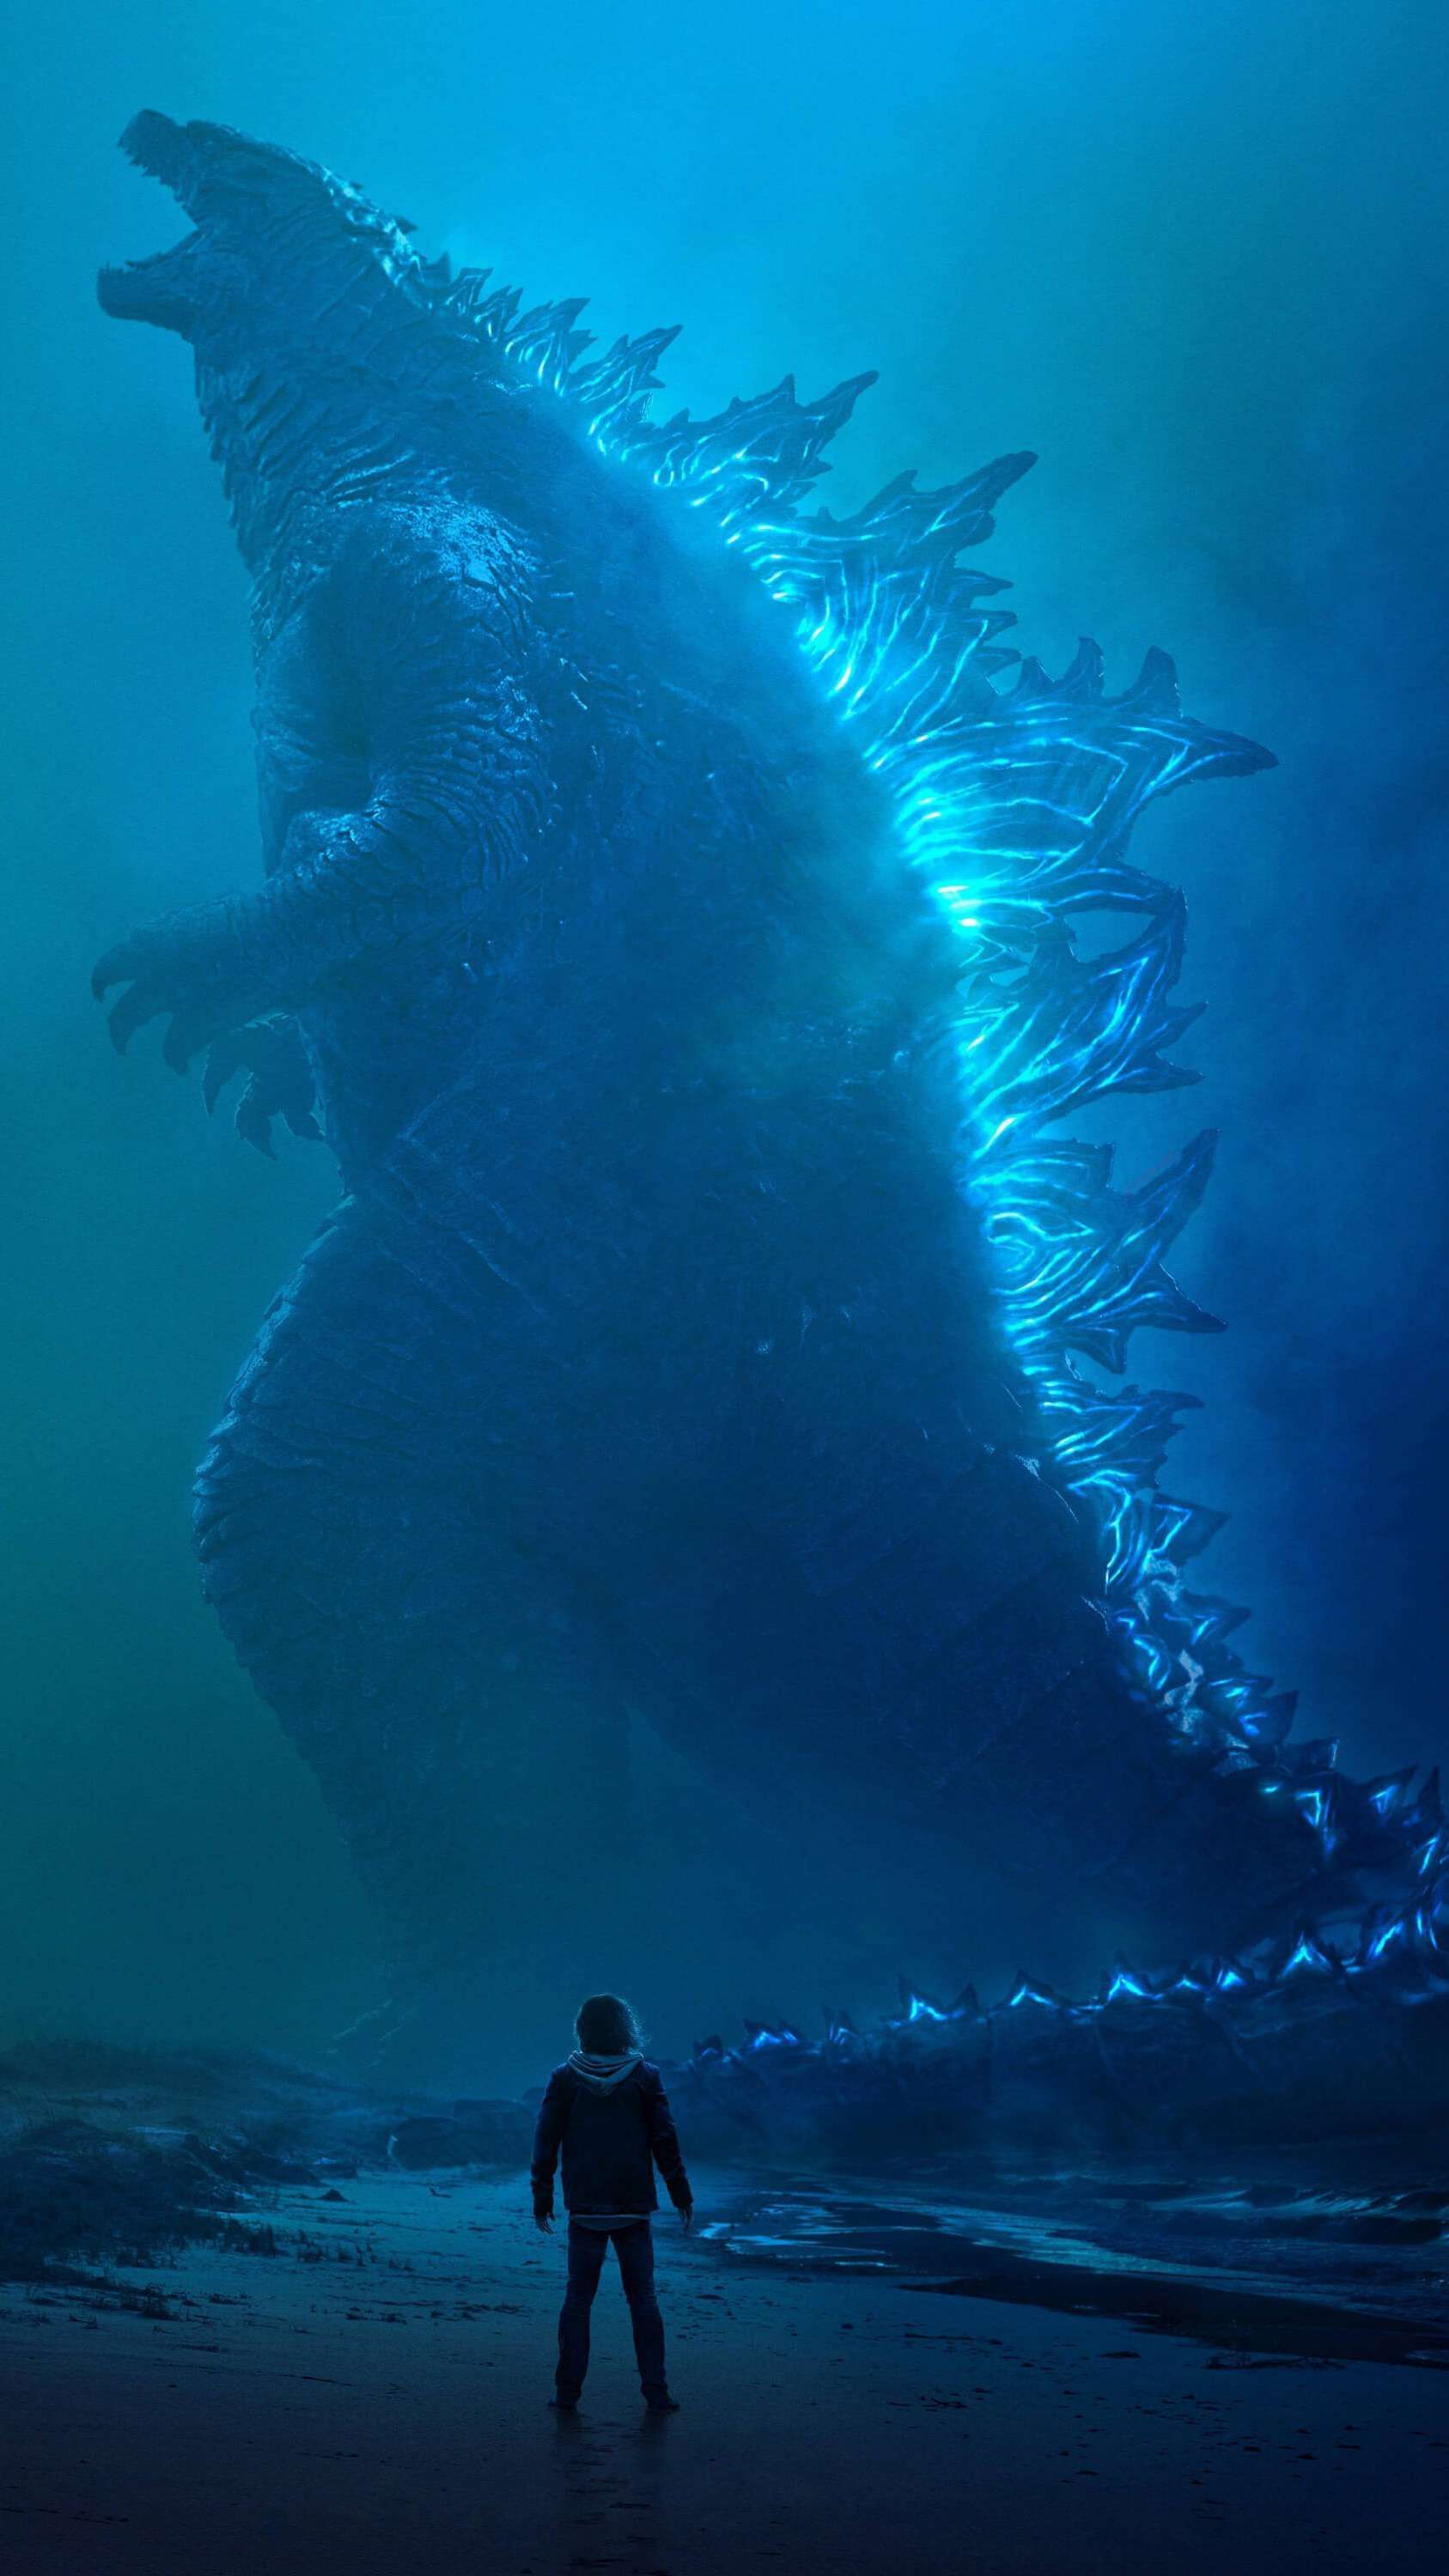 Godzilla iPhone Wallpaper. Godzilla wallpaper, Kaiju monsters, Godzilla